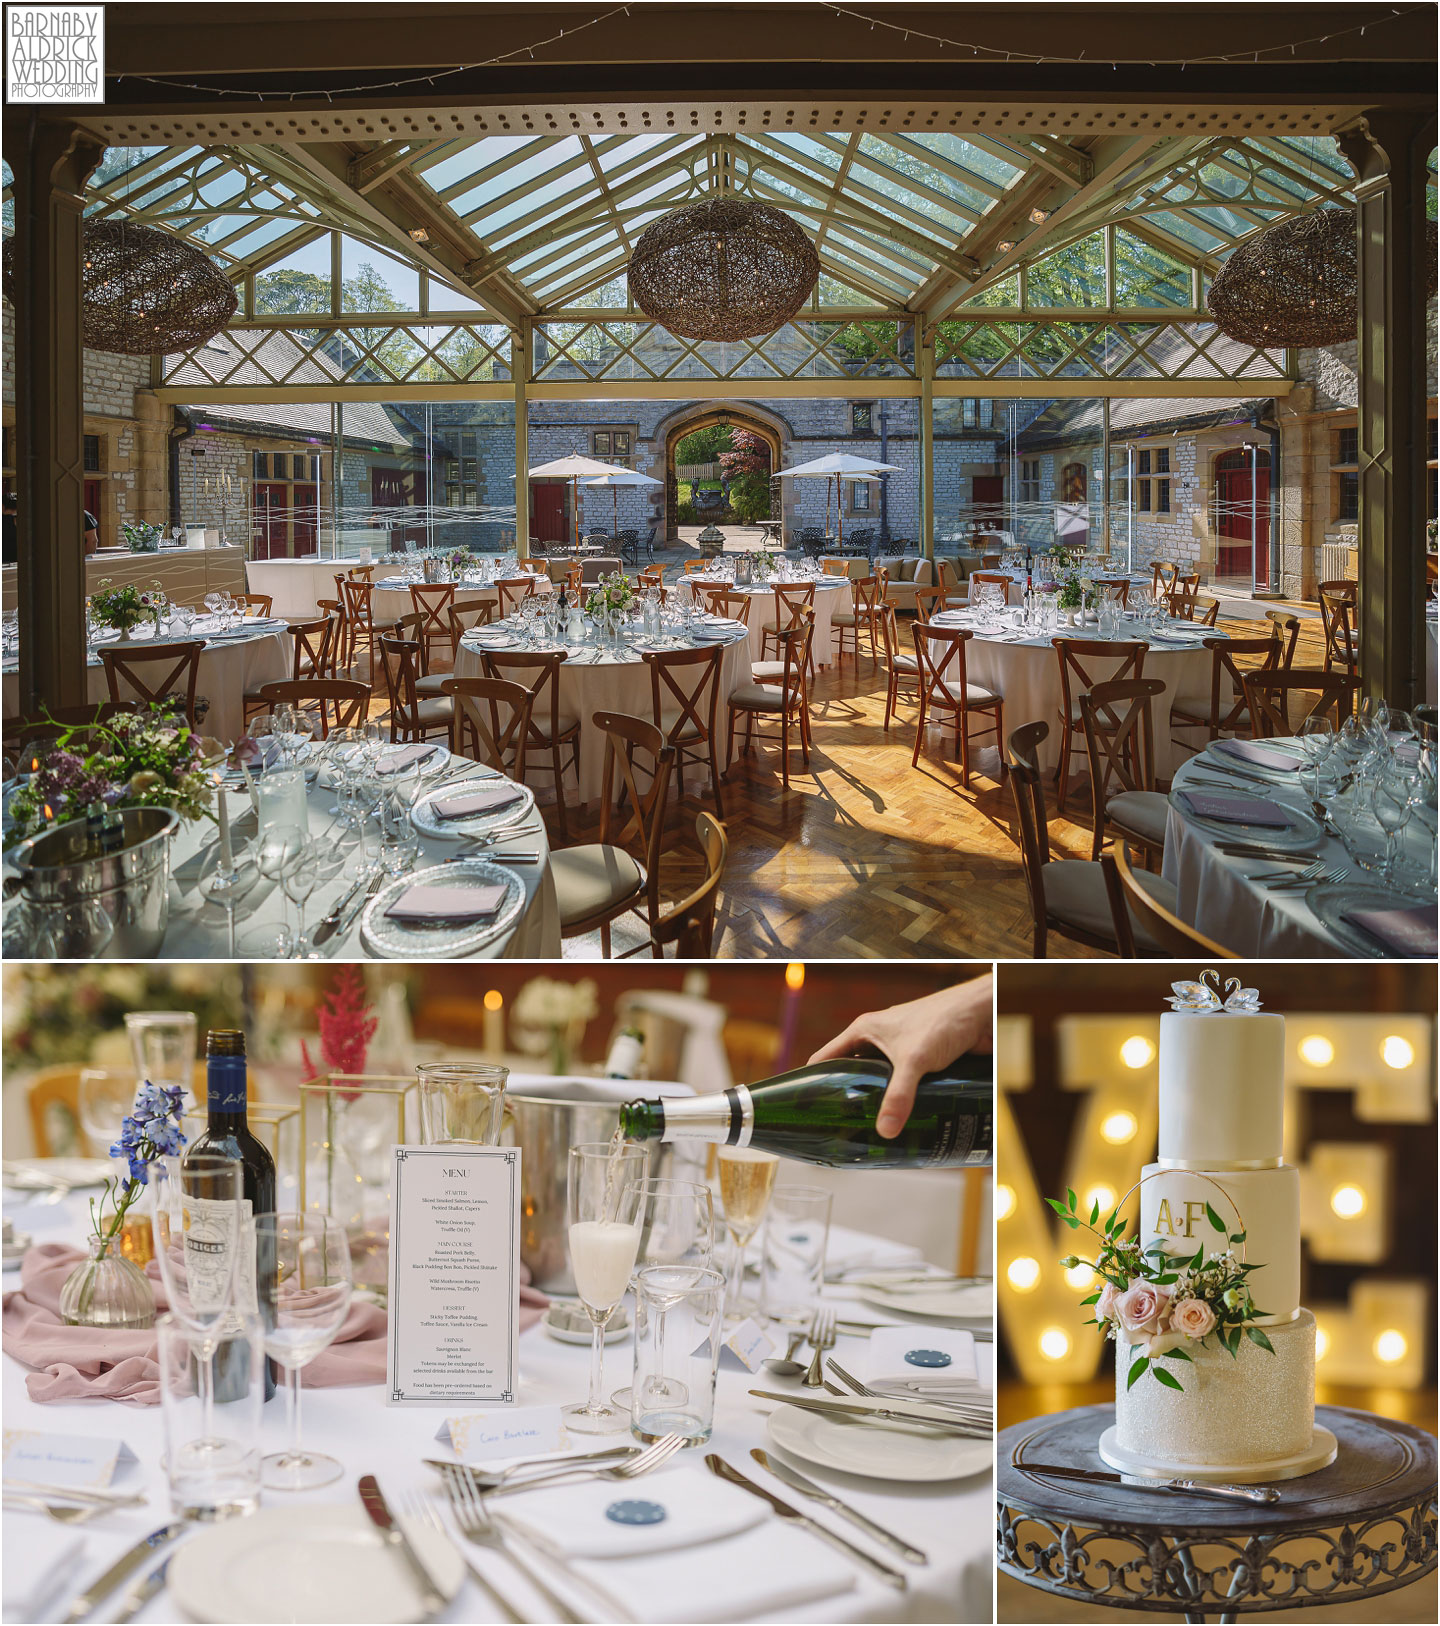 Thornbridge Hall wedding meal photos by Yorkshire Wedding Photographer Barnaby Aldrick